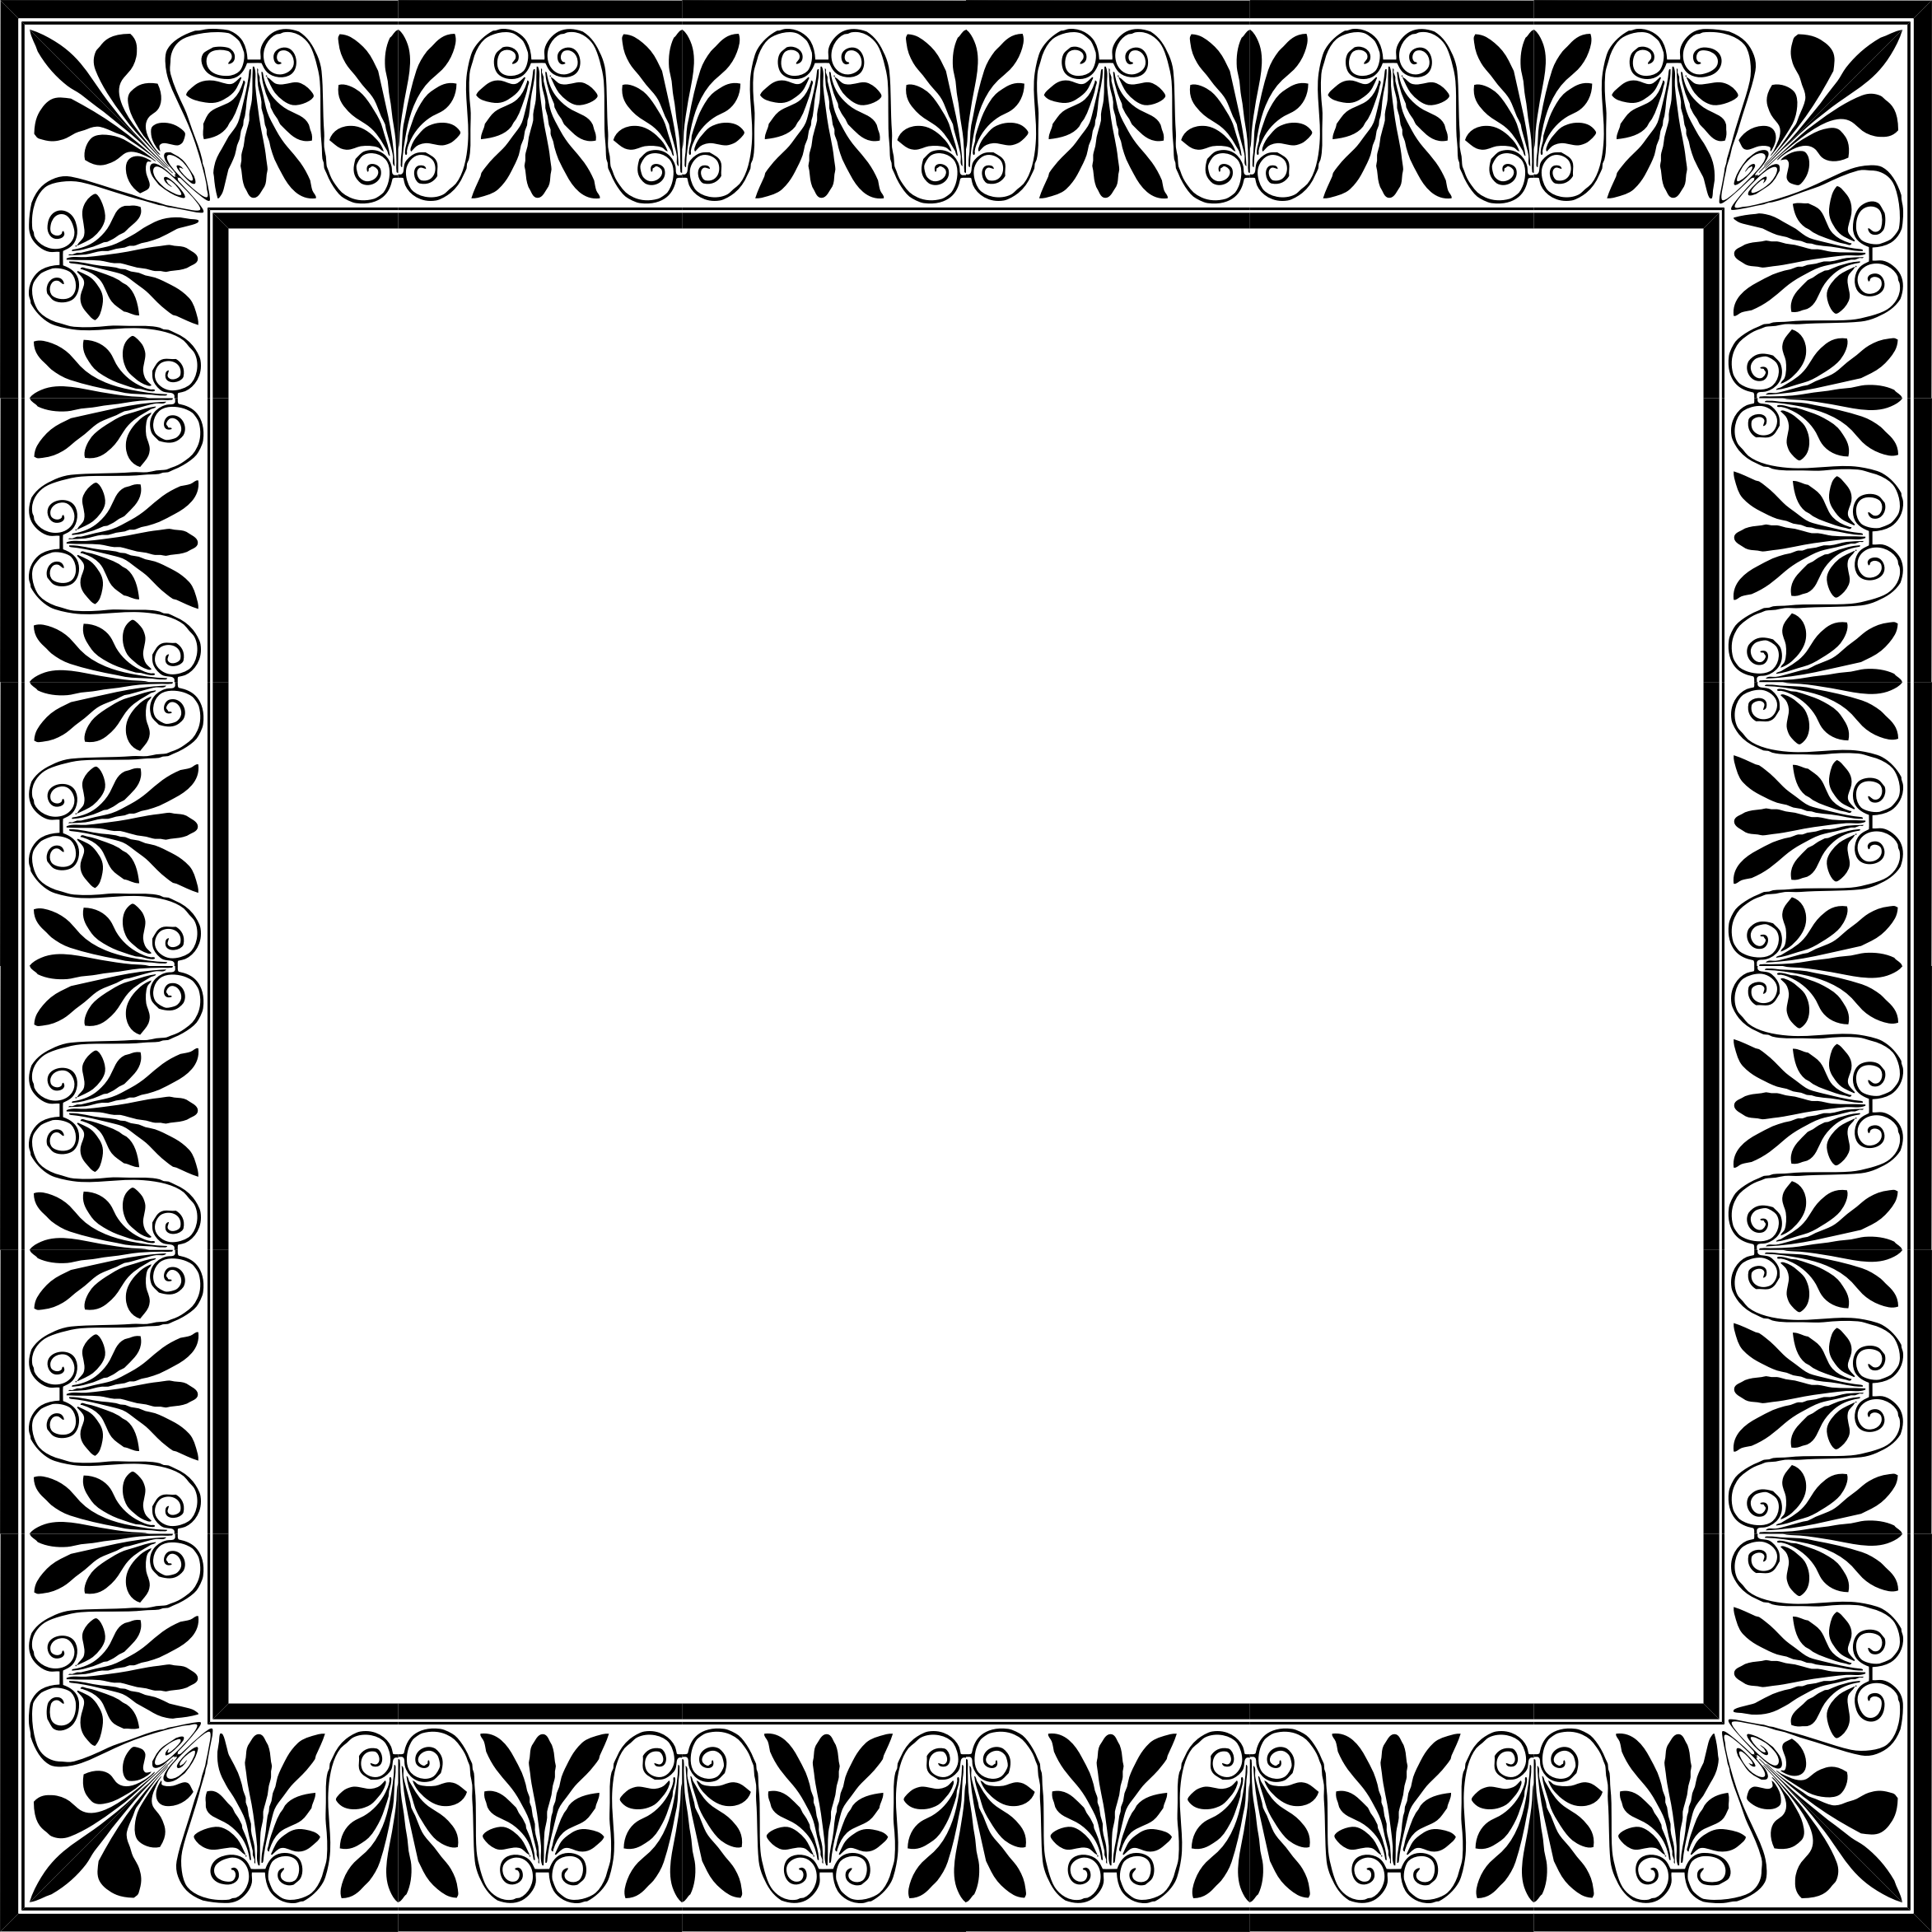 Big Image - Train Silhouette (2346x2346)